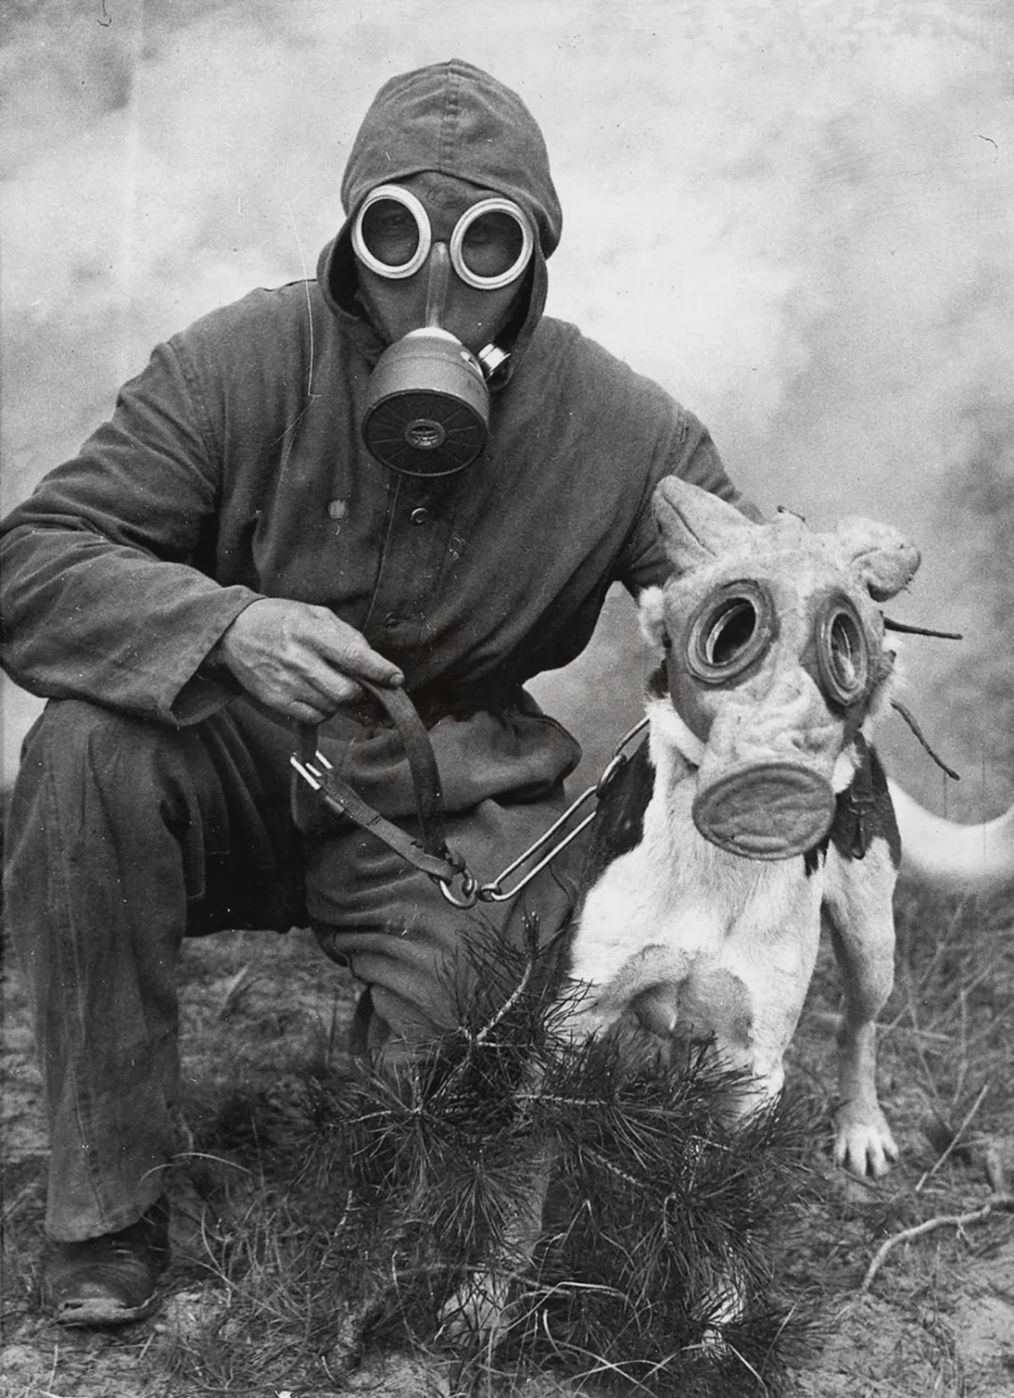 poison gas mask ww1